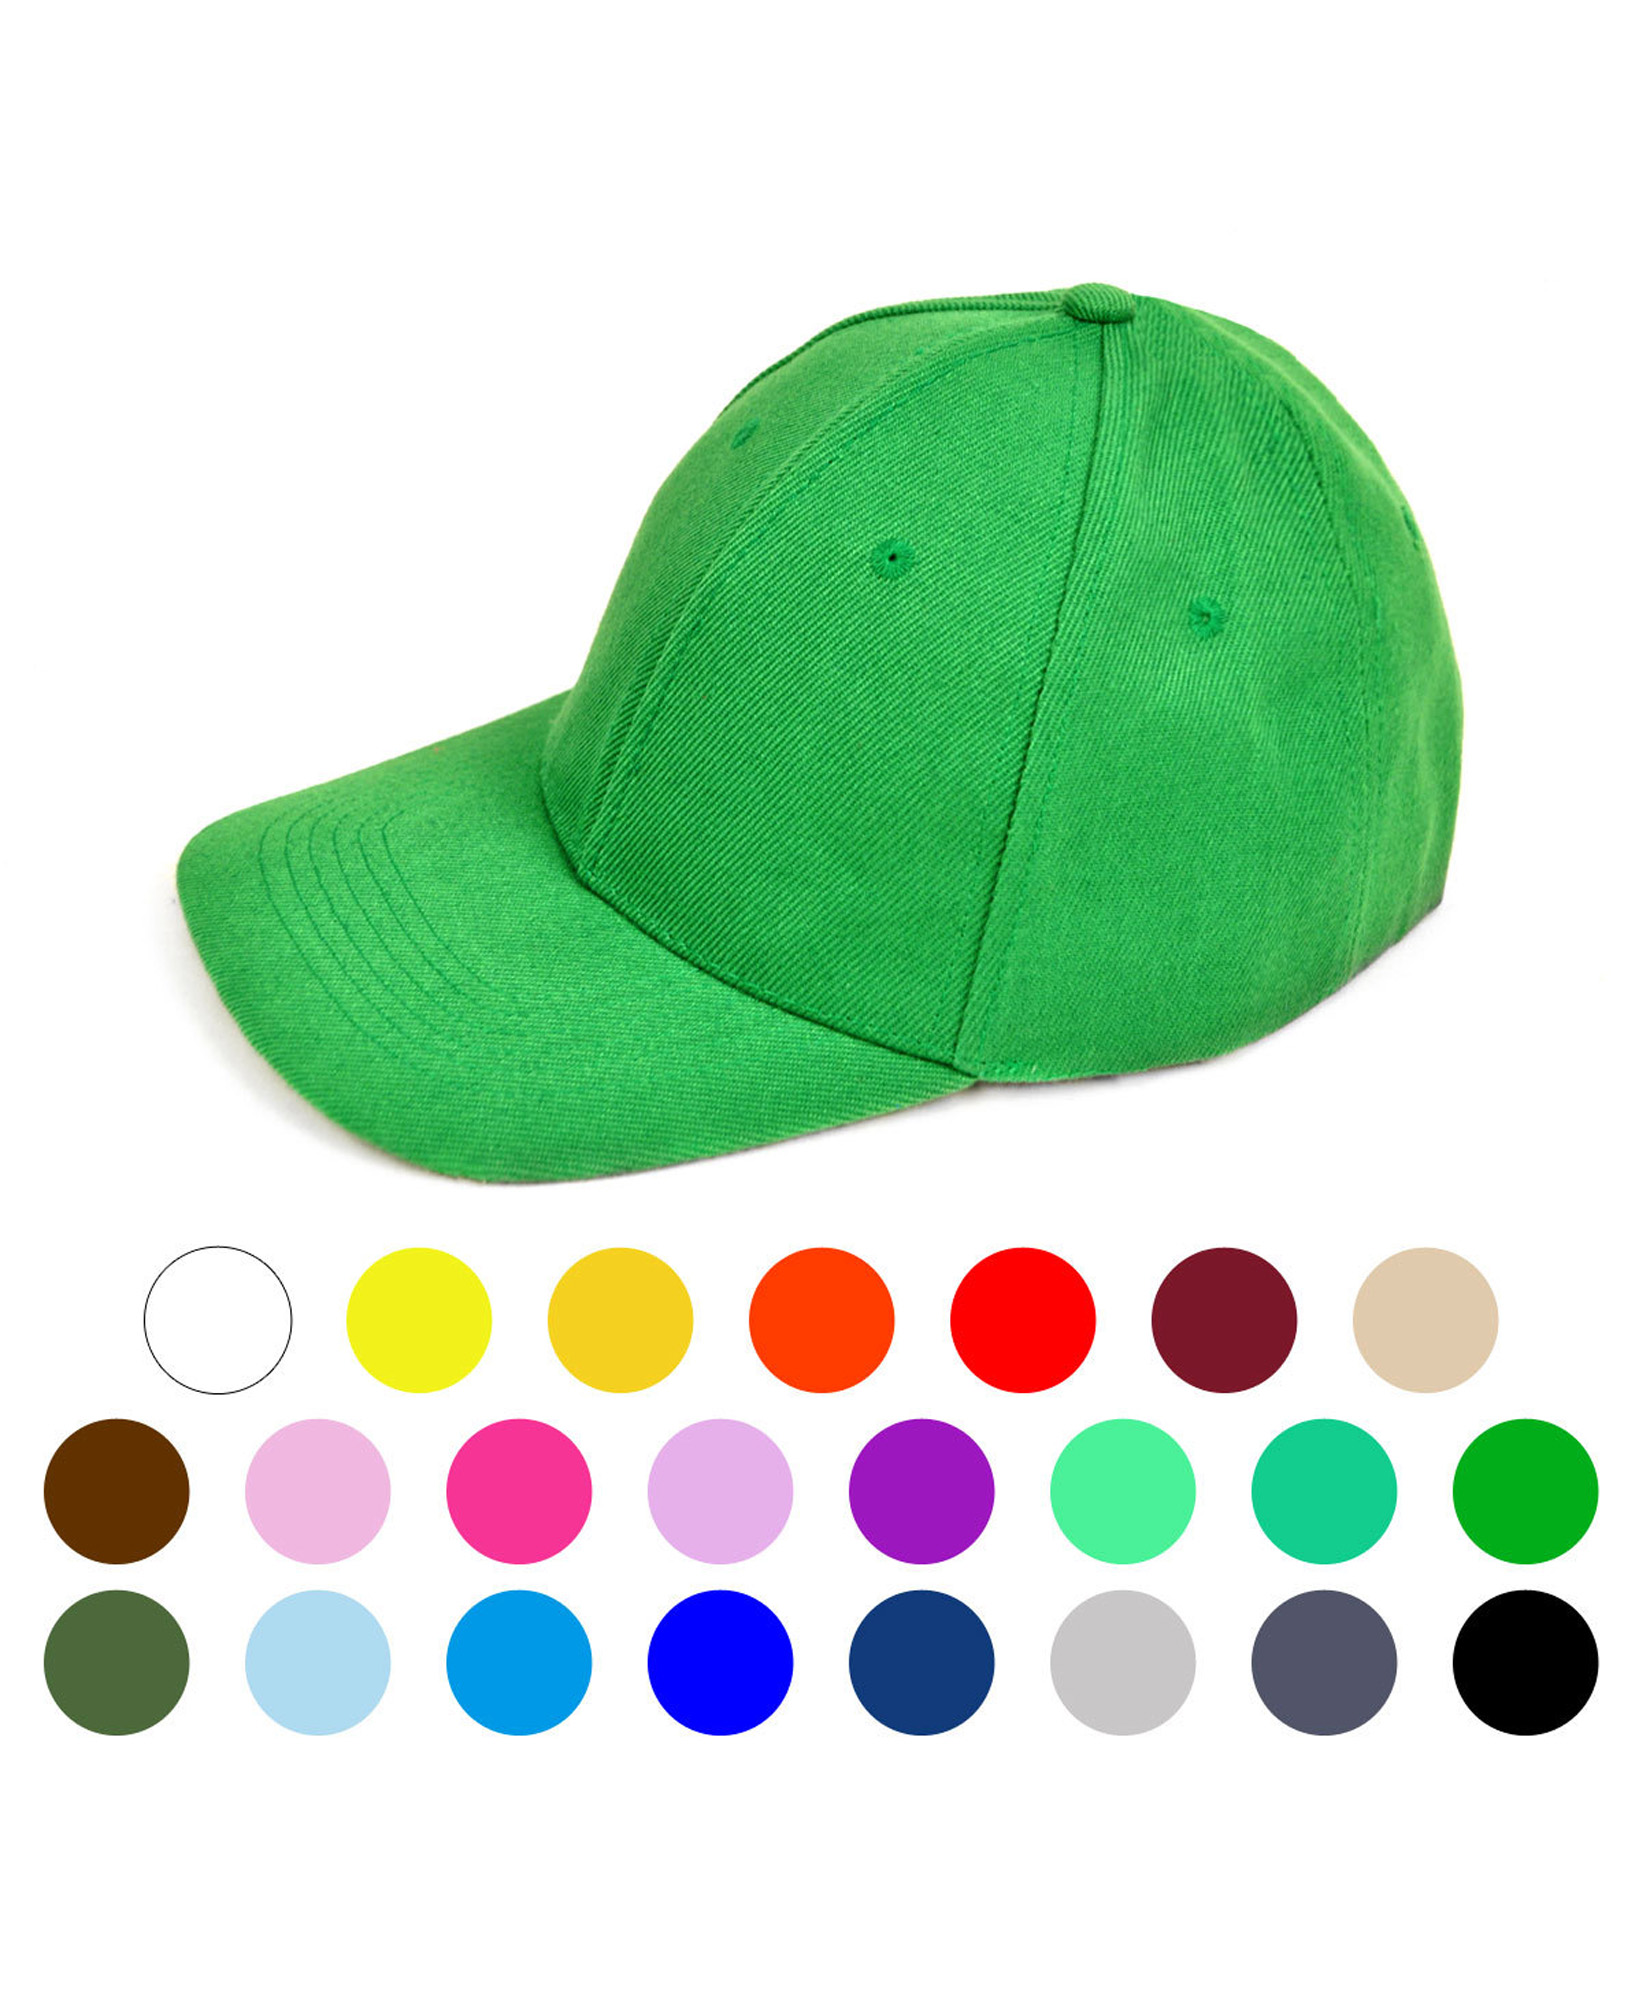 Selini NY Plain Promotional Solid Color Baseball Cap